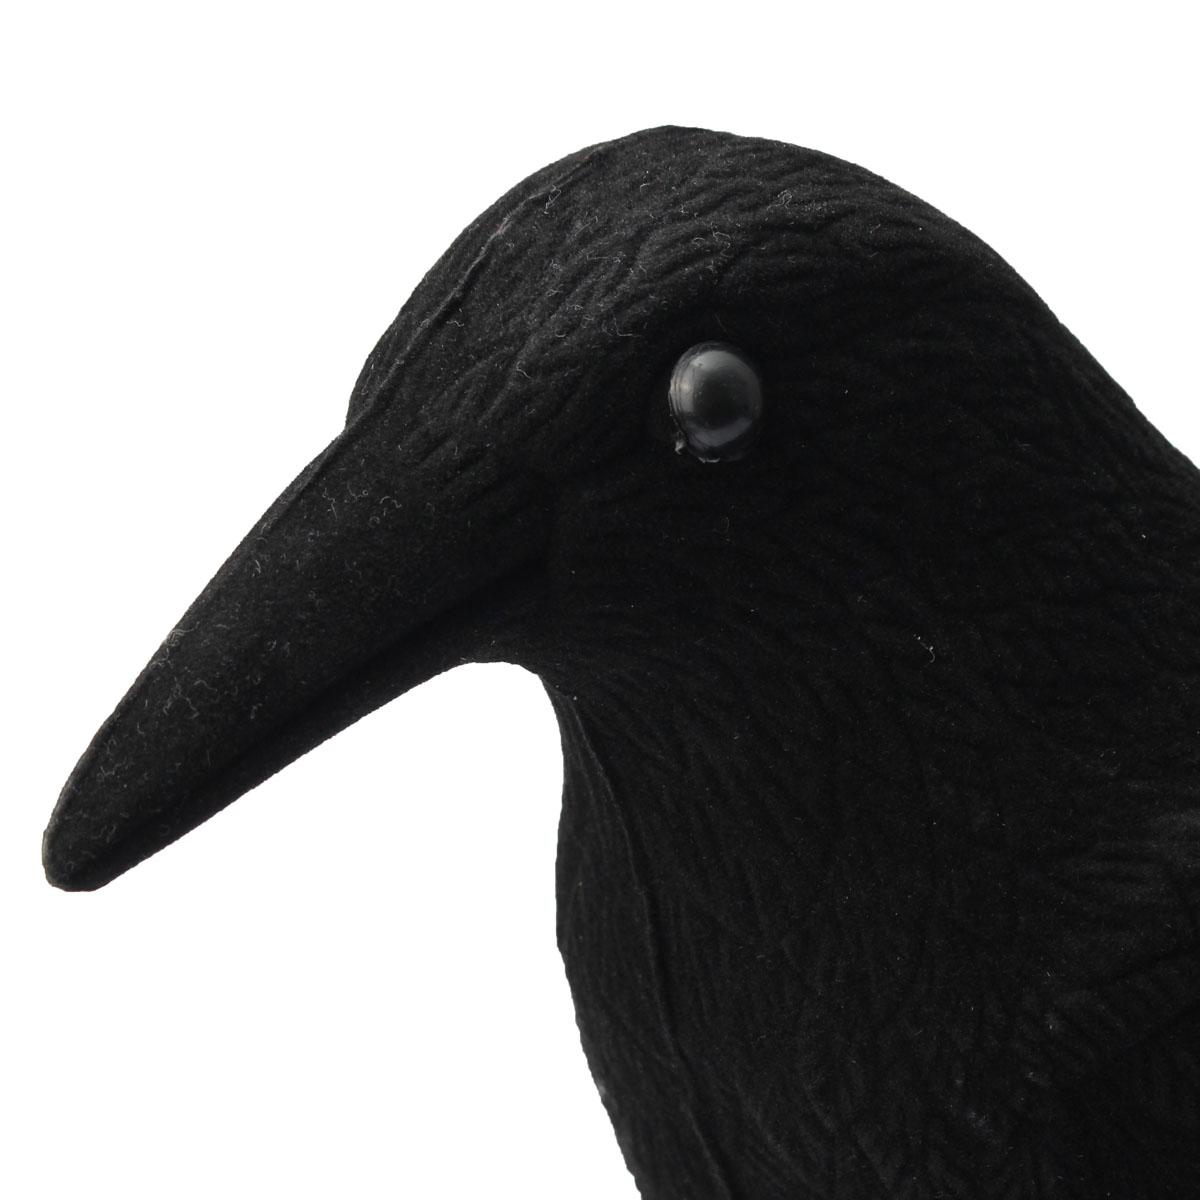 1Pcs-Birds-Decoy-Plastic-Flocked-Hard-Black-Crow-Trap-Decoration-for-Hunting-Camping-1001075-6